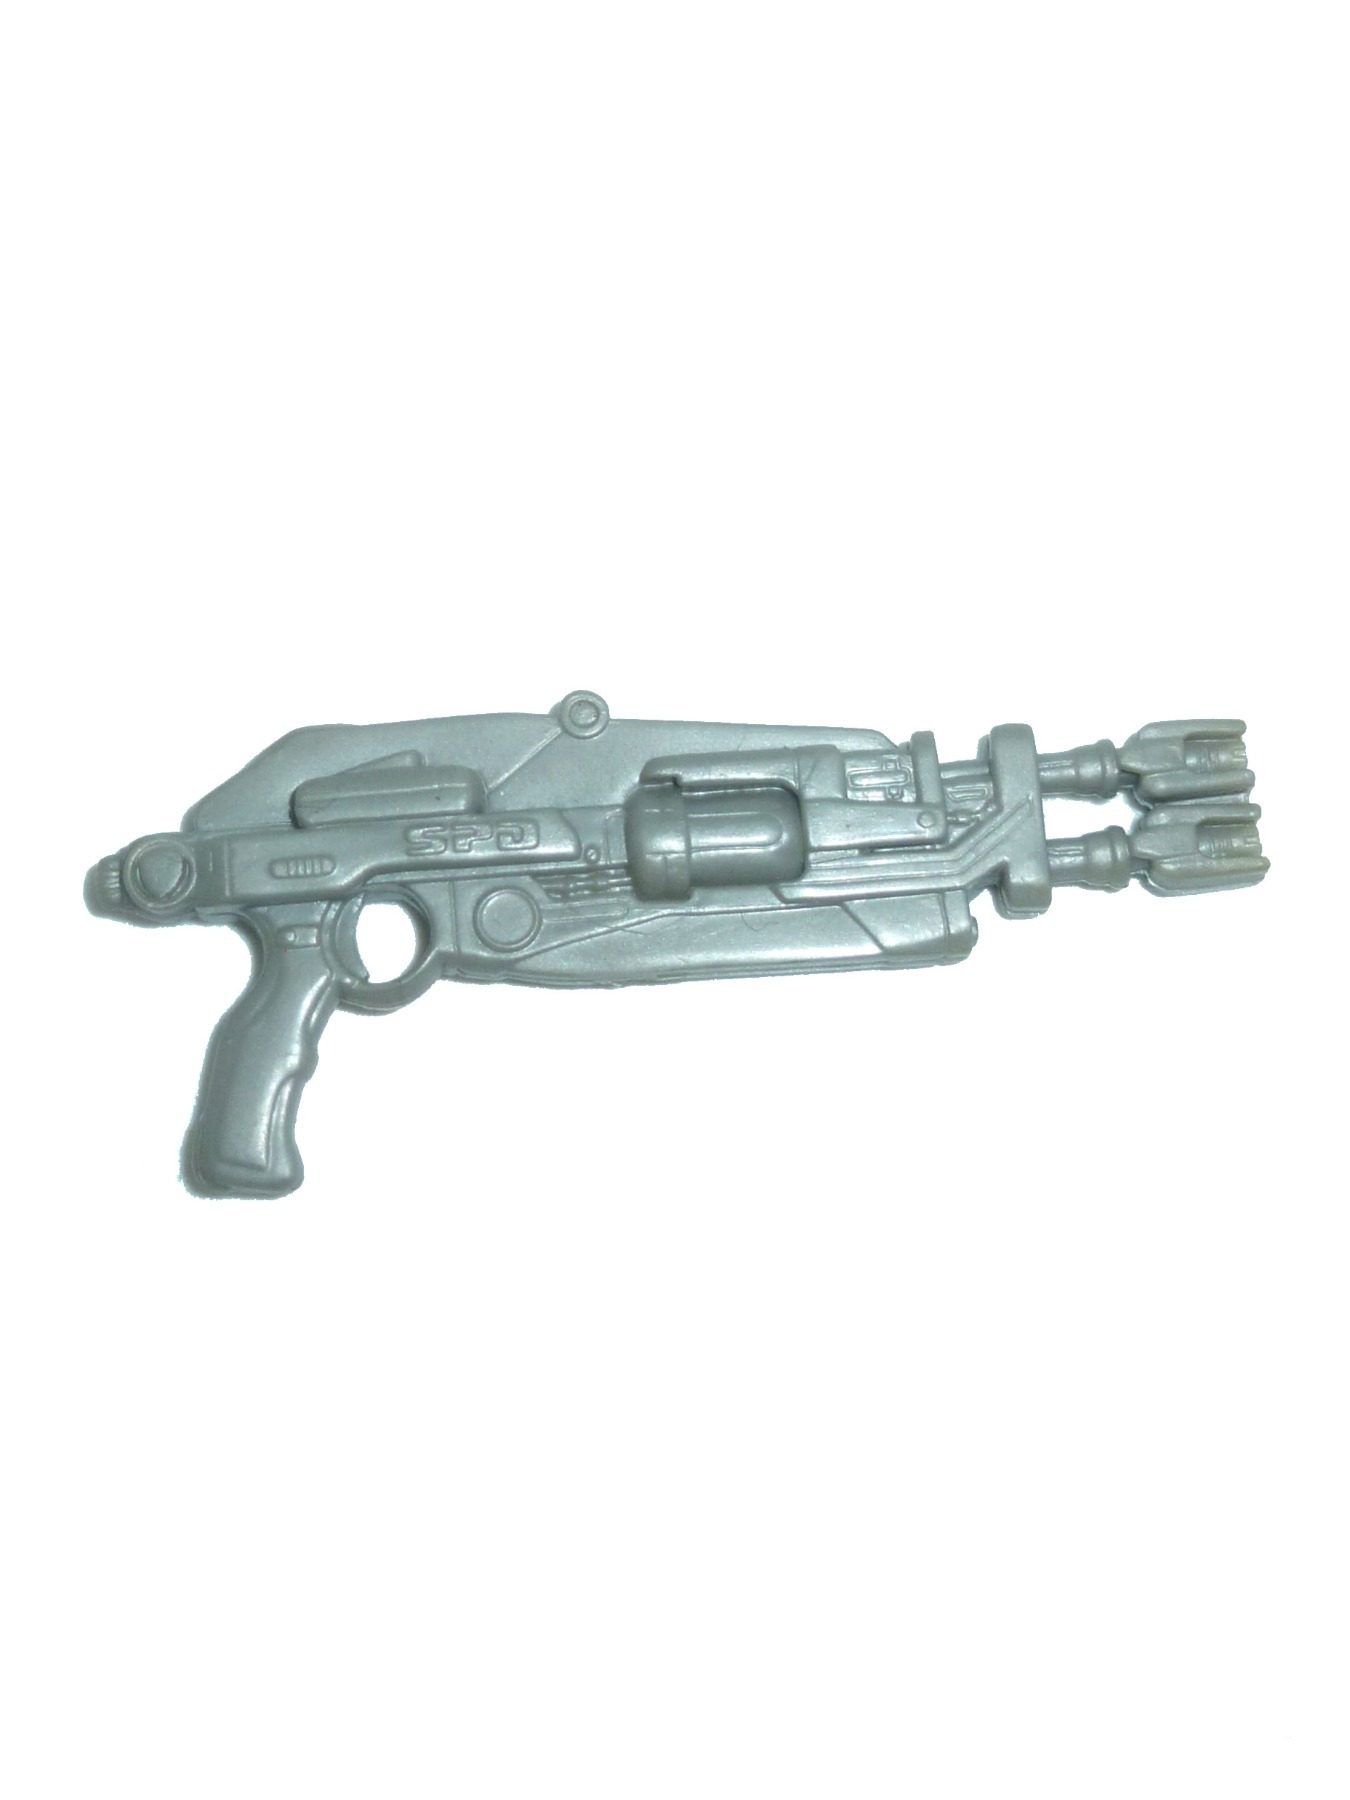 Delta Enforcer - weapon Bandai 2005